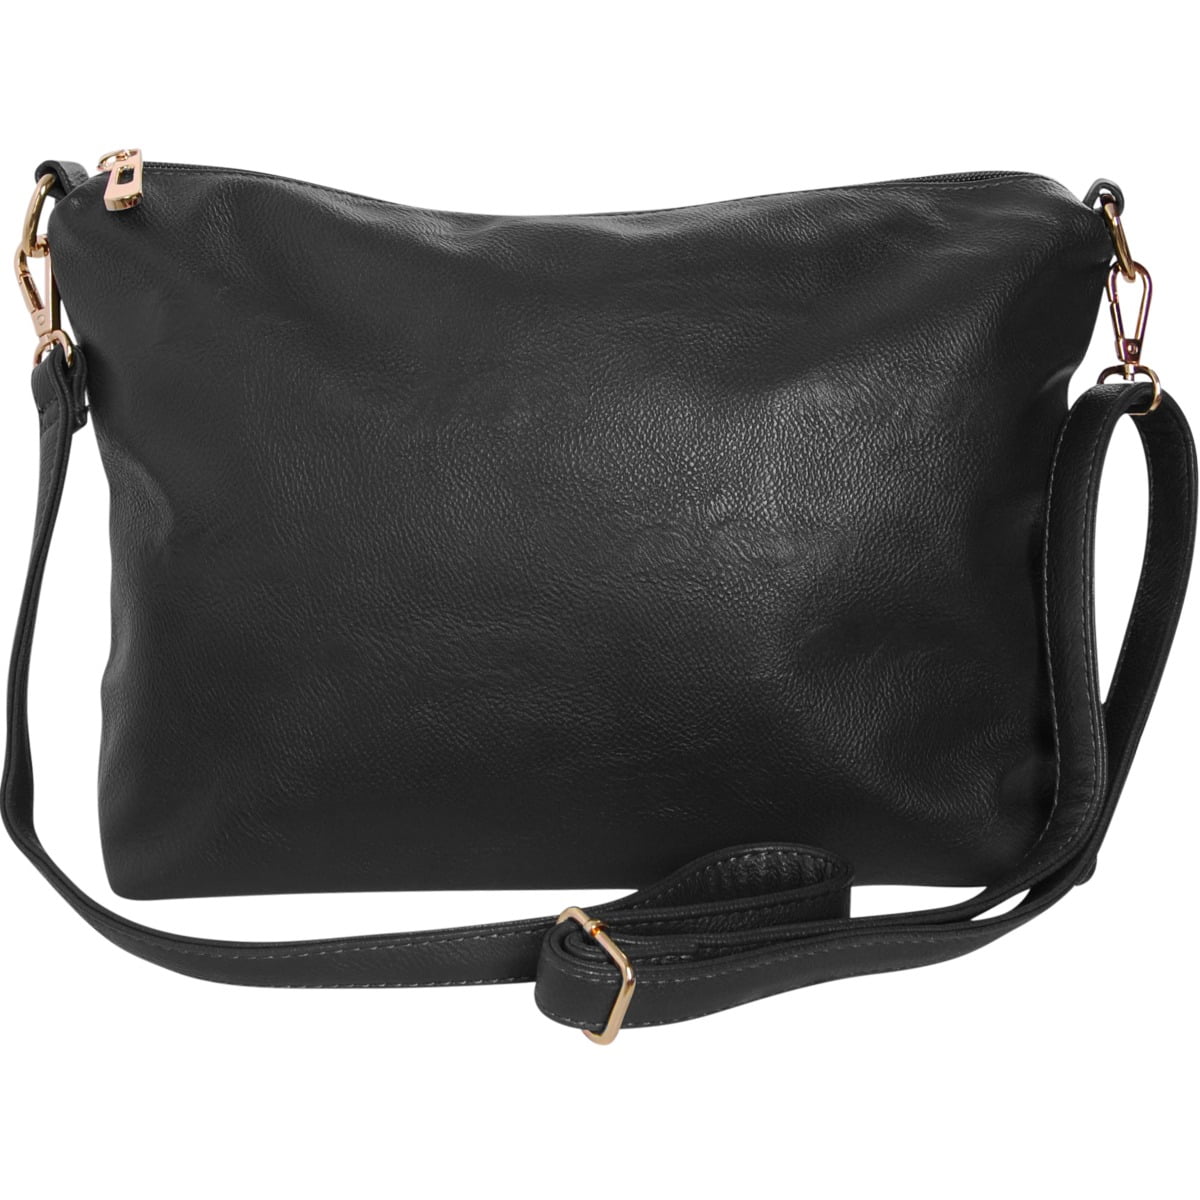 Womens Soft PU Leather Shoulder Bag With Long Strap Multiple Pockets Vegan Friendly Handbag 